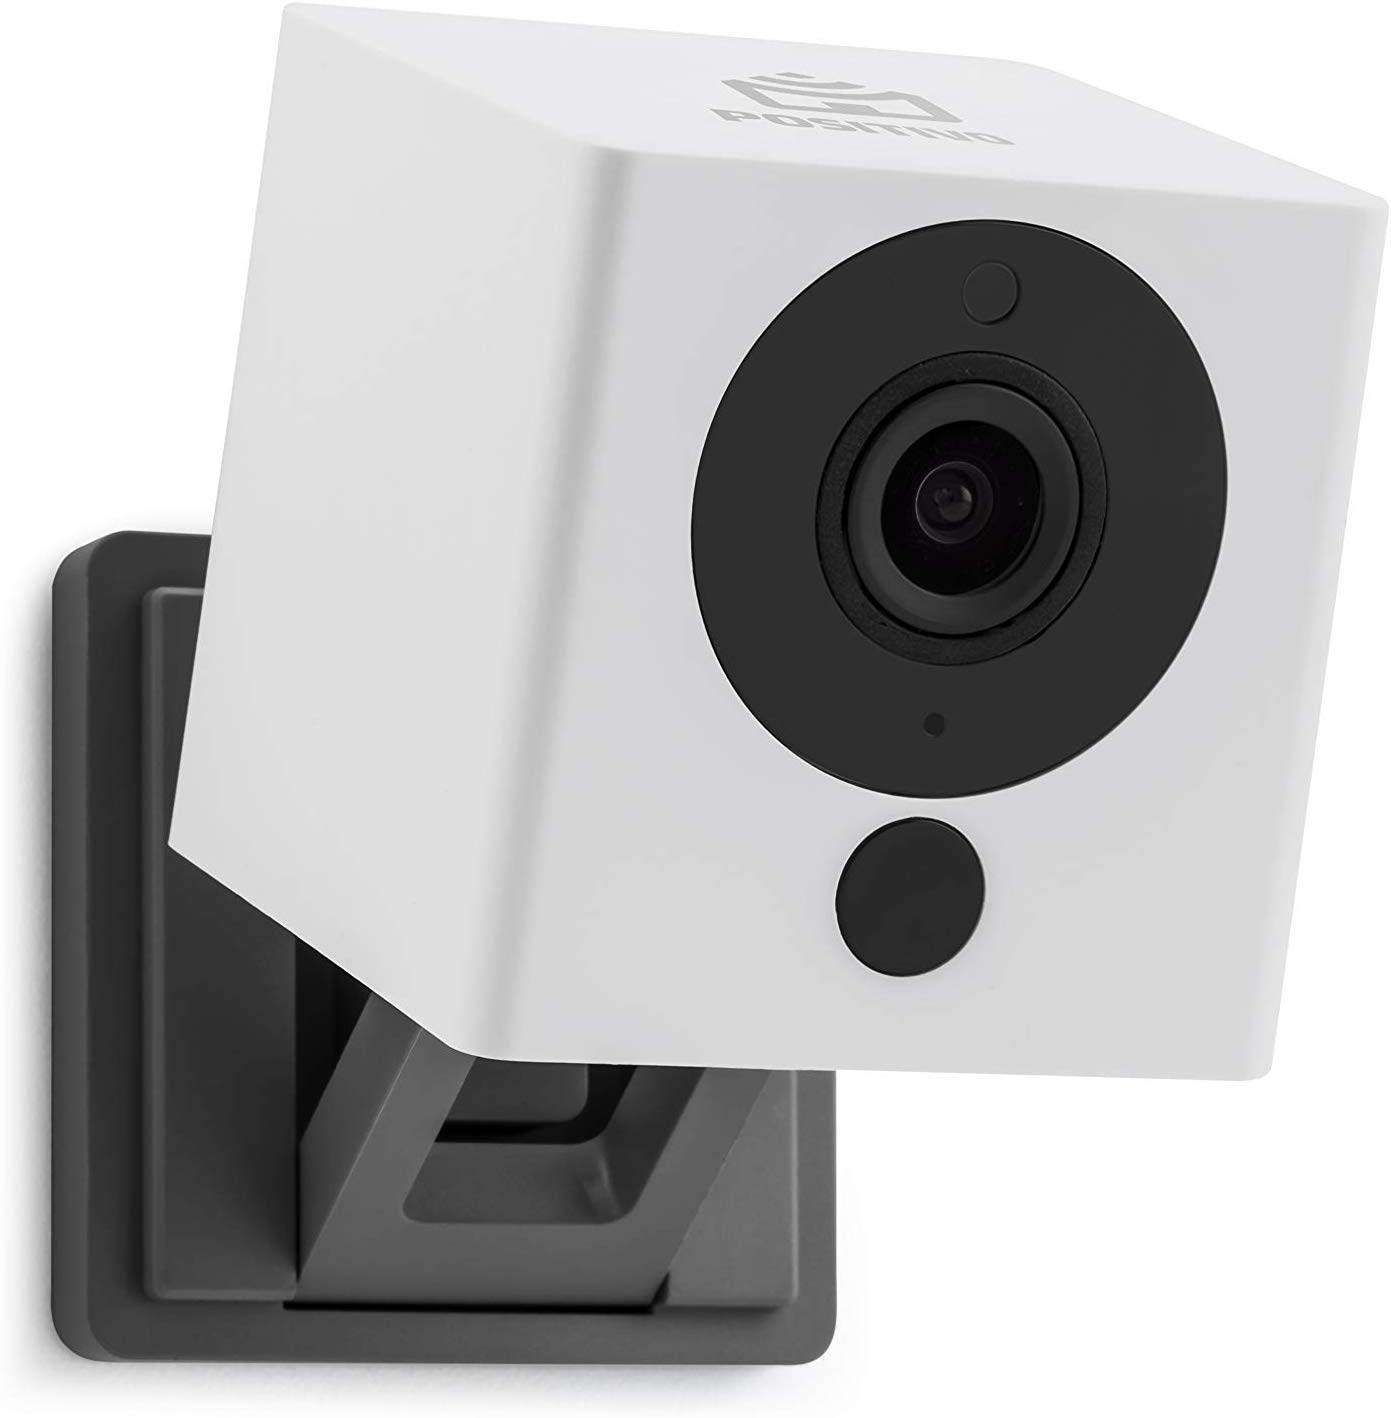 Image: Positive Wi-Fi Smart Camera Smart Home